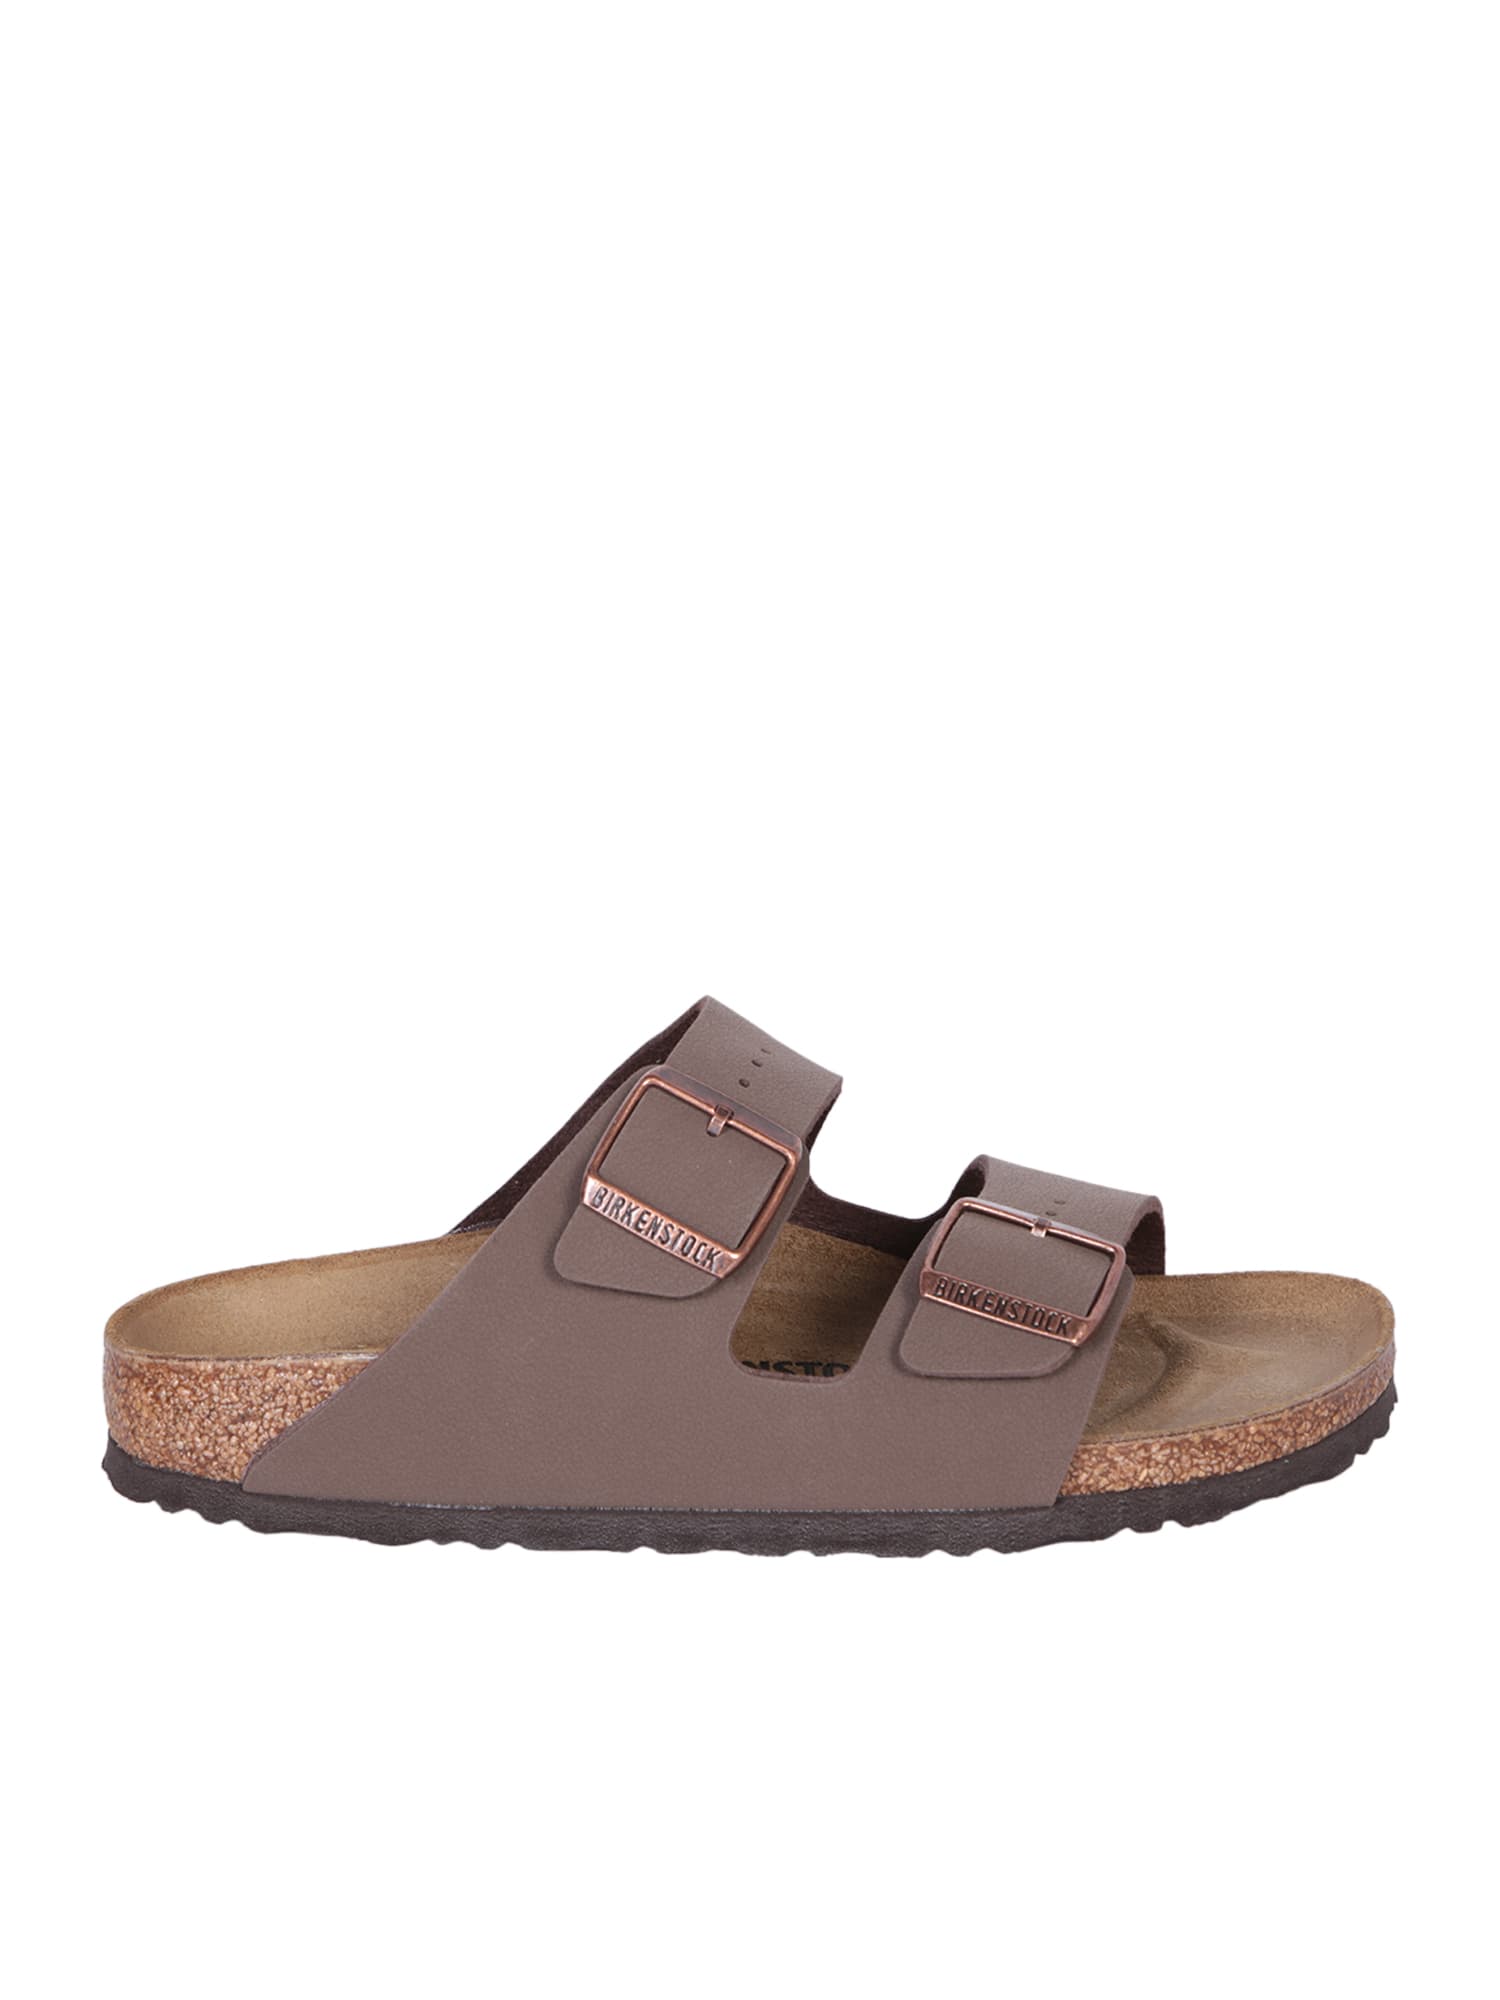 Shop Birkenstock Double-strap Brown Sandals